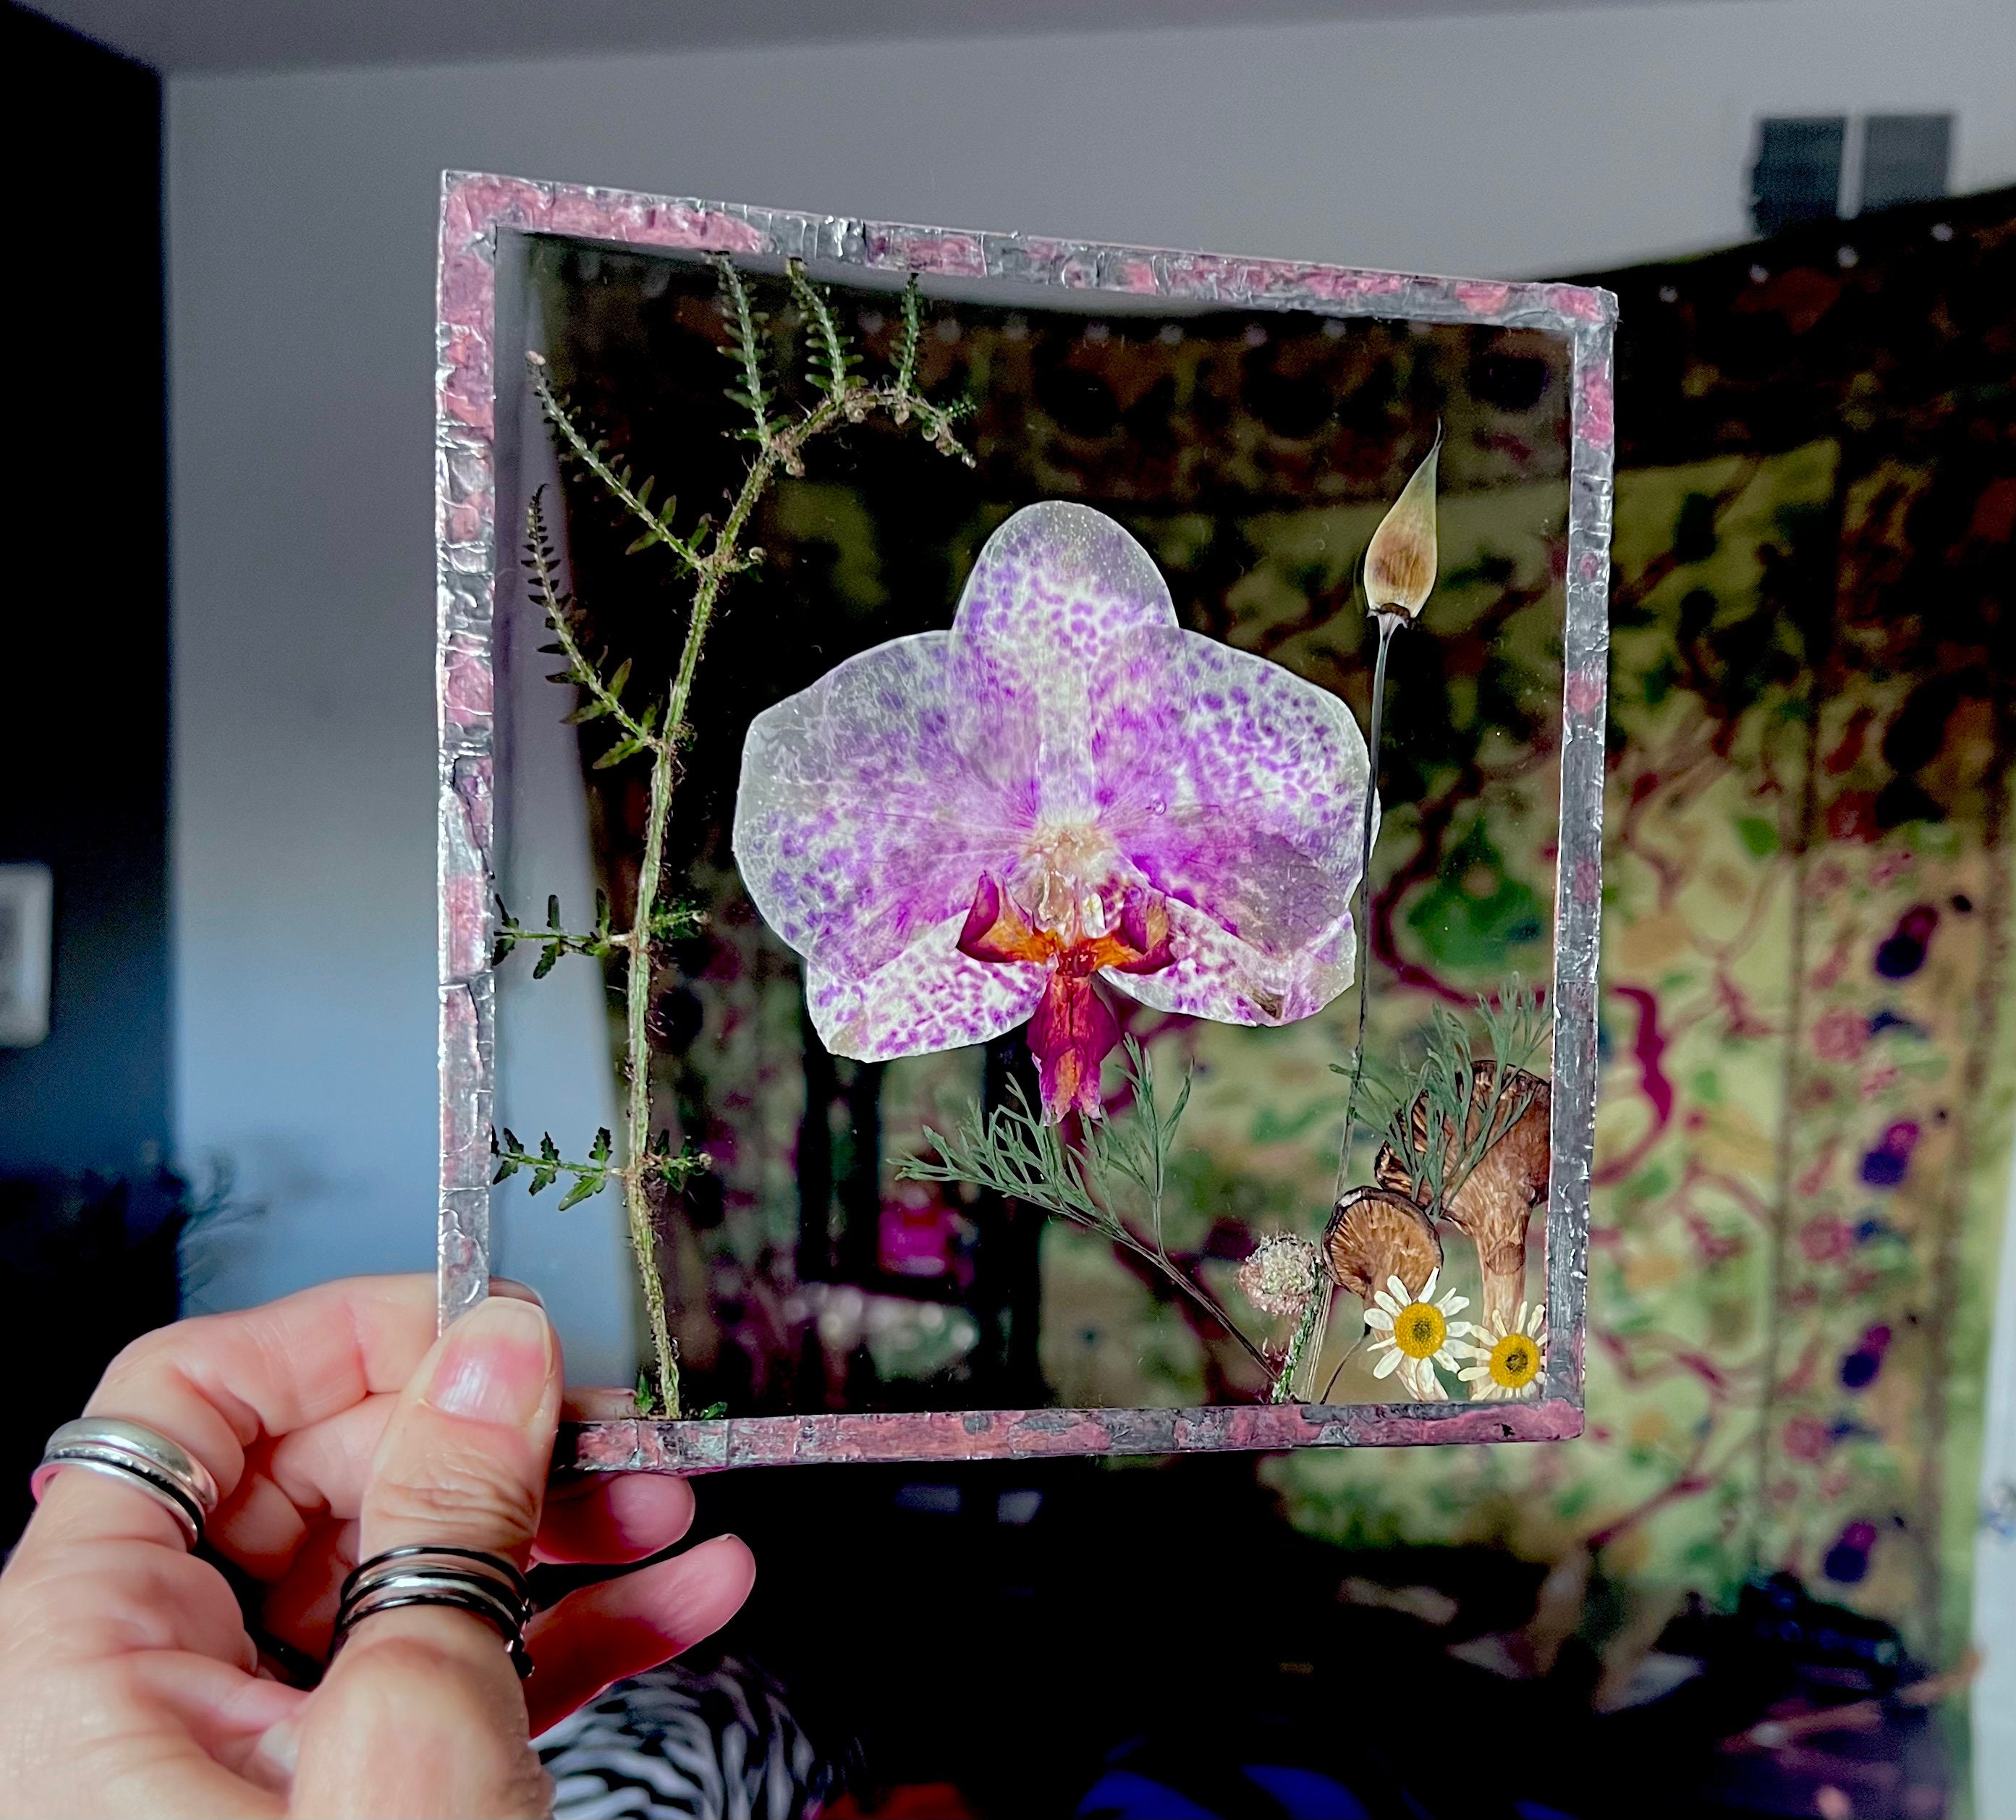 Handmade Crochet Light Orchid Purple and Dark Orchid Purple Baby Blanket 